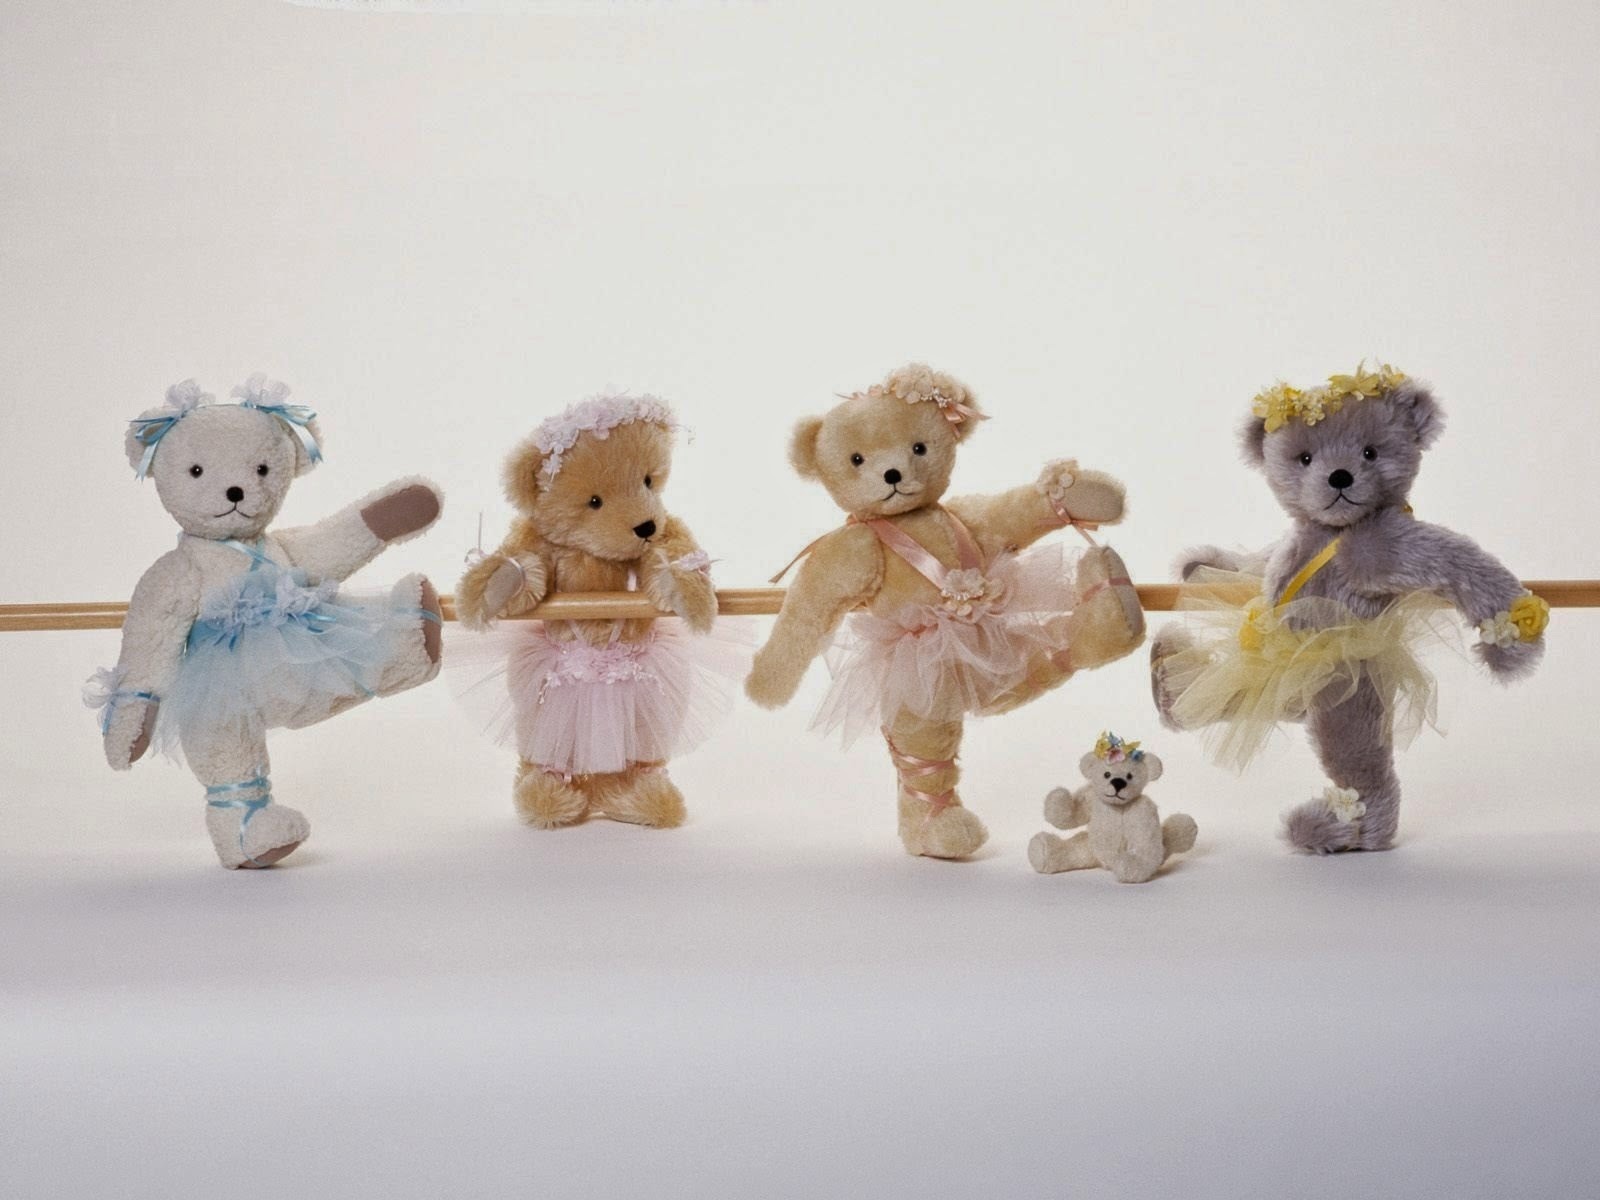 Cute Teddy Bear Wallpaper For Little Kids And Children Pixhome